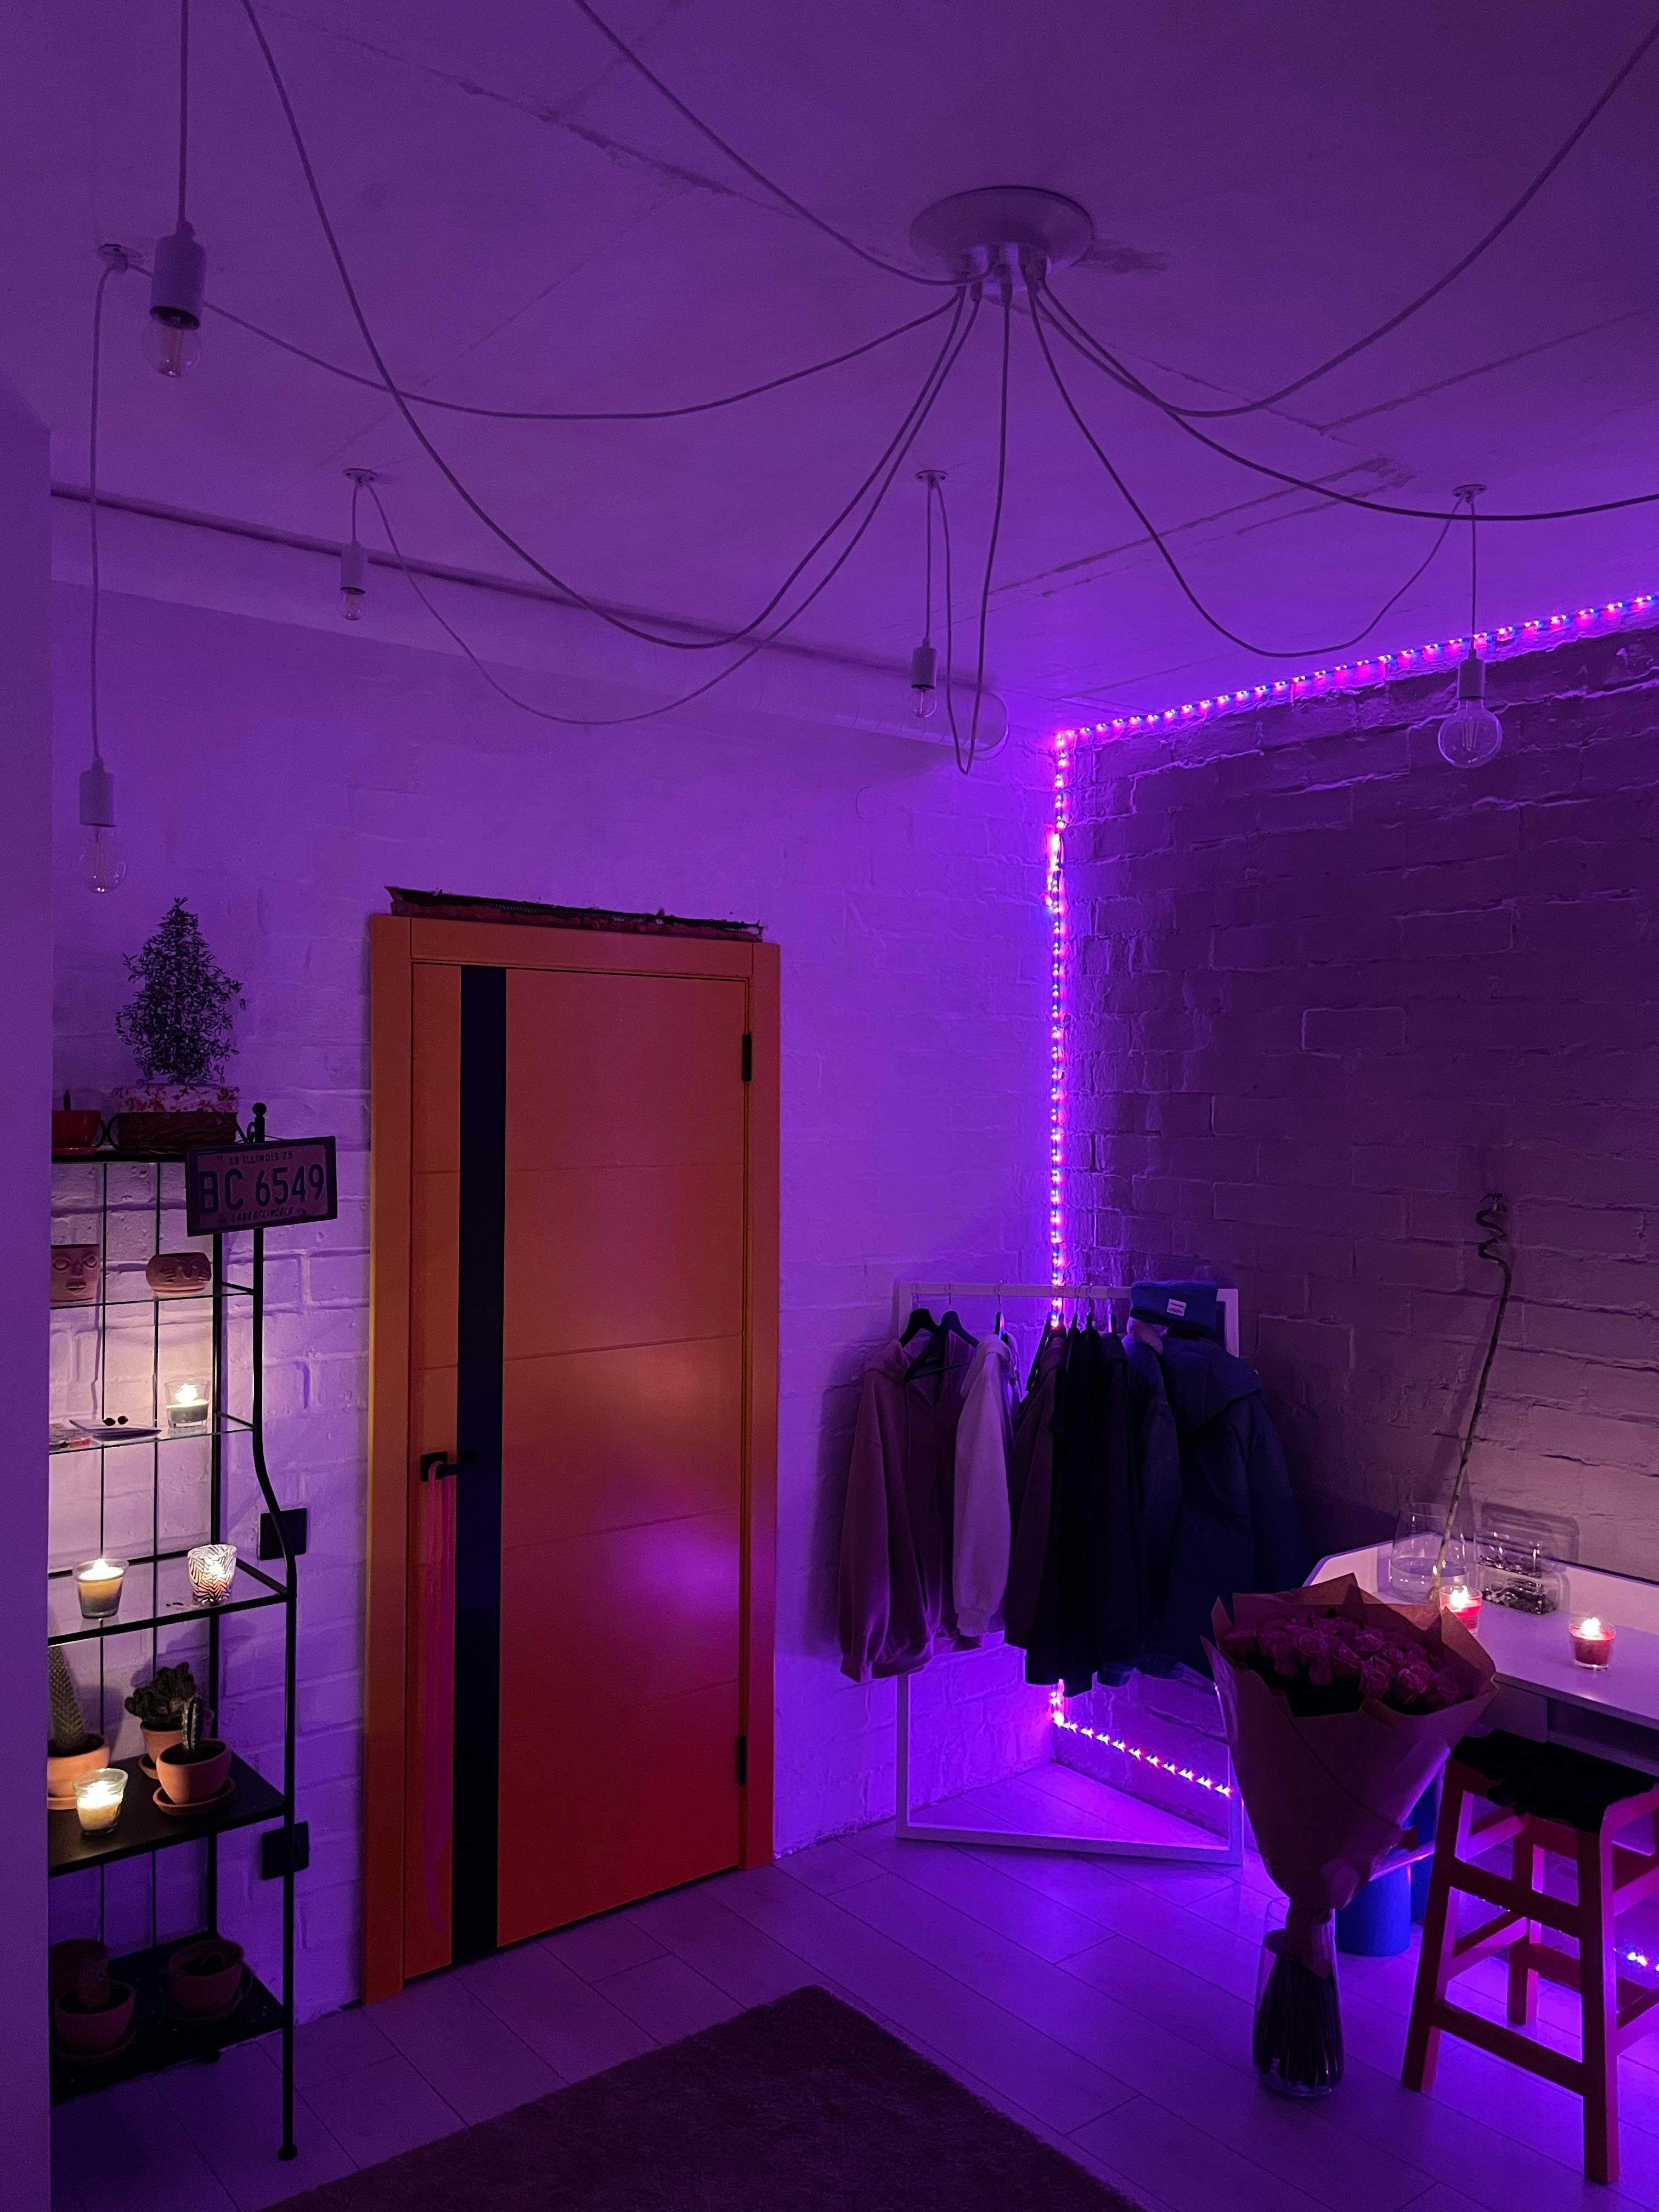 Purple Led Lights Illuminating Living Room · Free Stock Photo